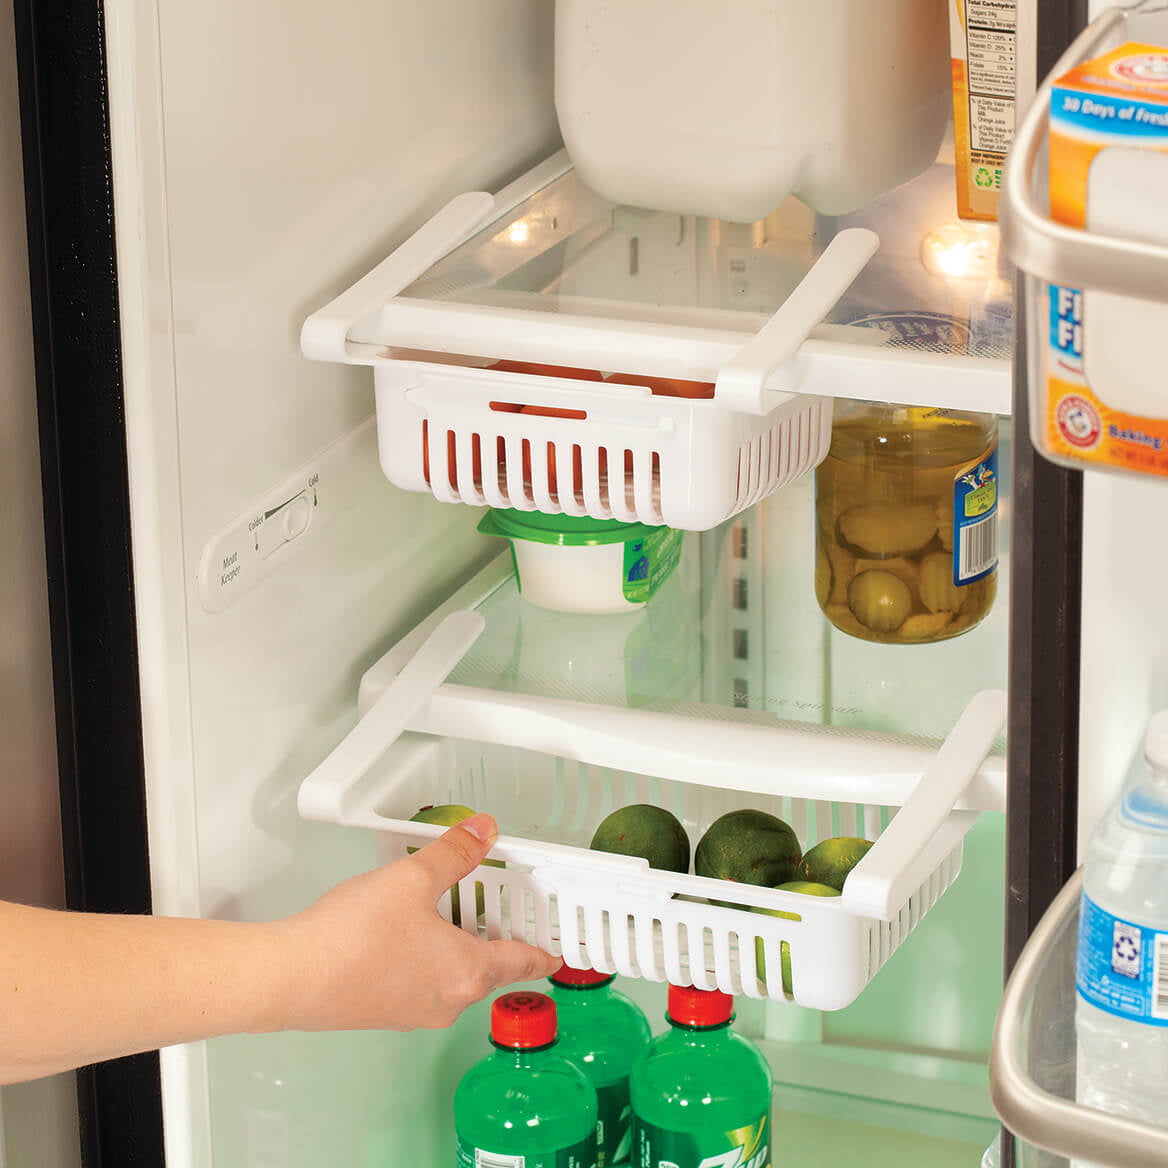 15 Under-$35 Refrigerator Organizers at